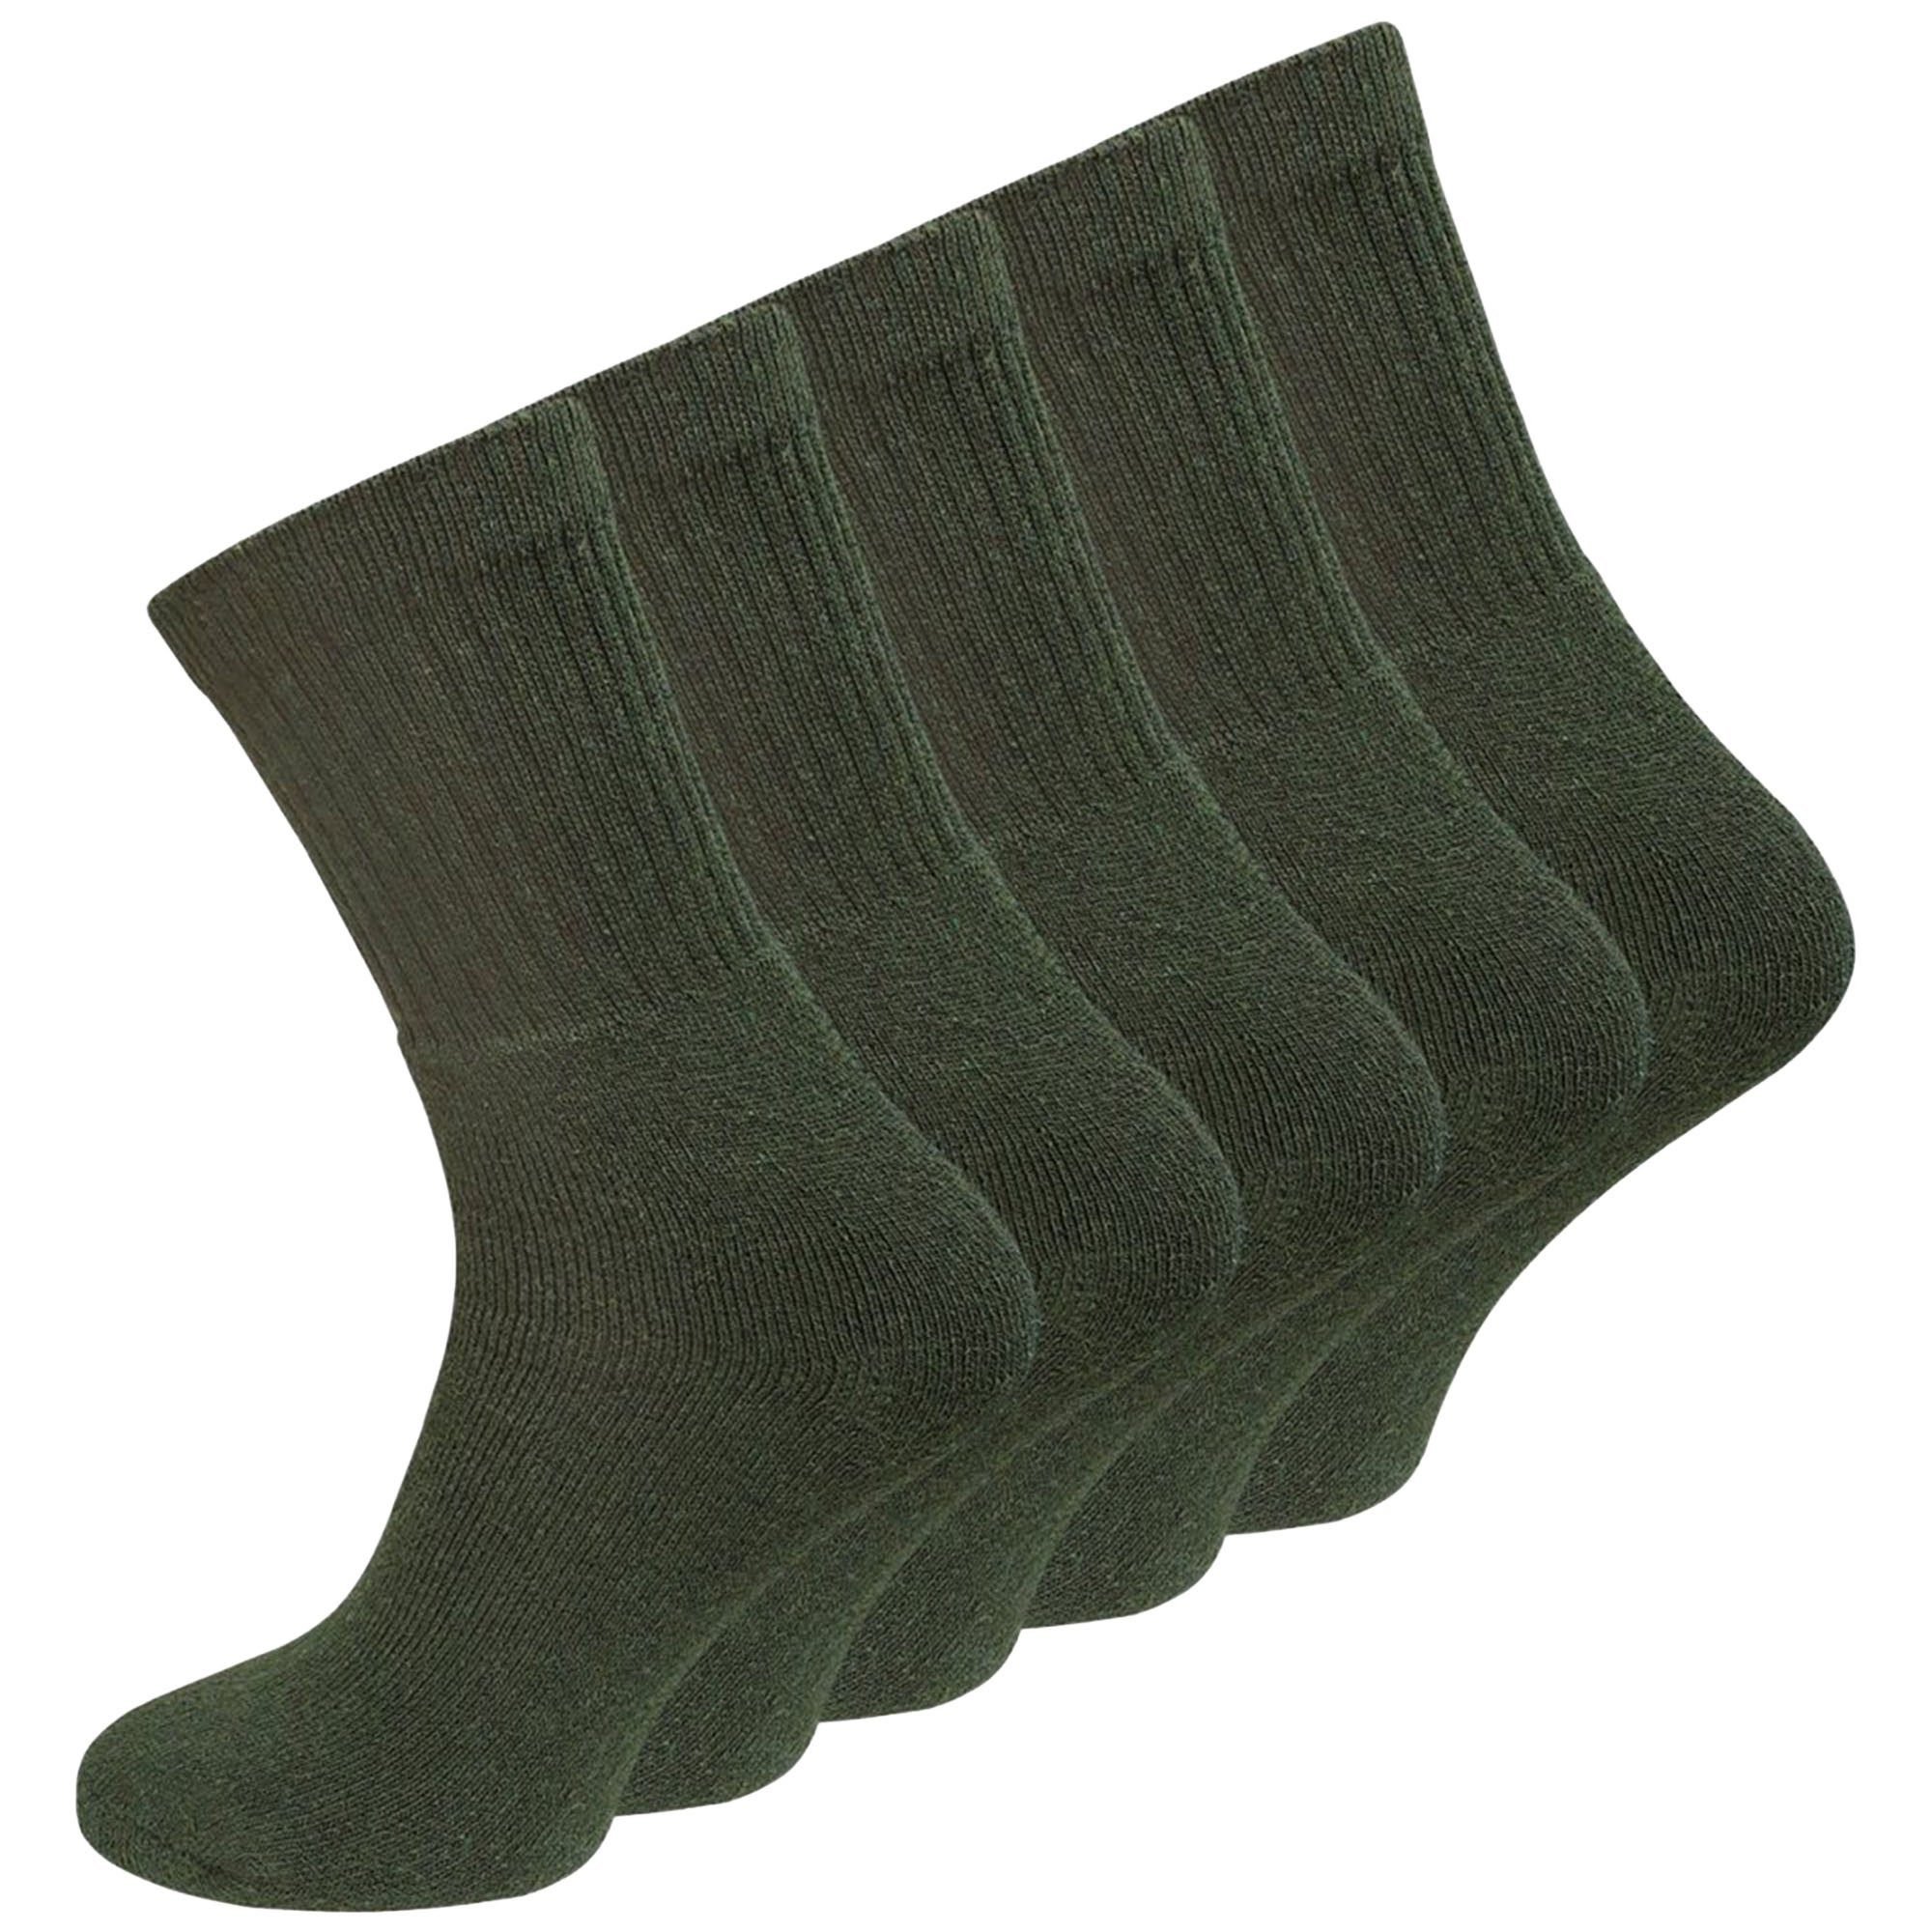 TSB Werk Socken Socken Strümpfe 5-80 Paar Army Arbeitssocken 39-46 Militär, Olivgrün, Baumwolle